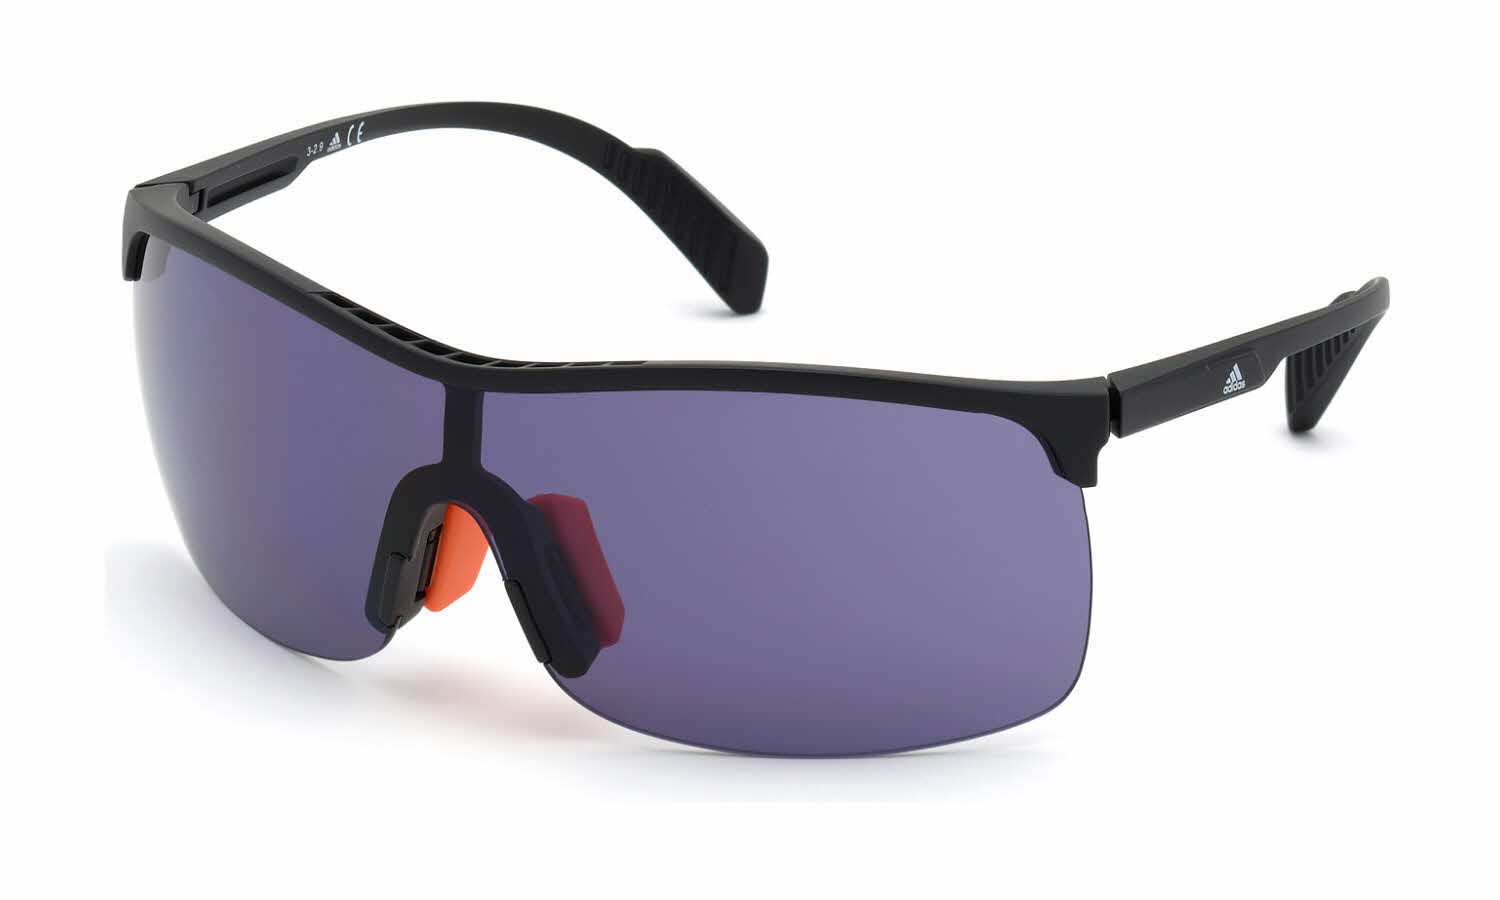 Adidas SP0003 Sunglasses